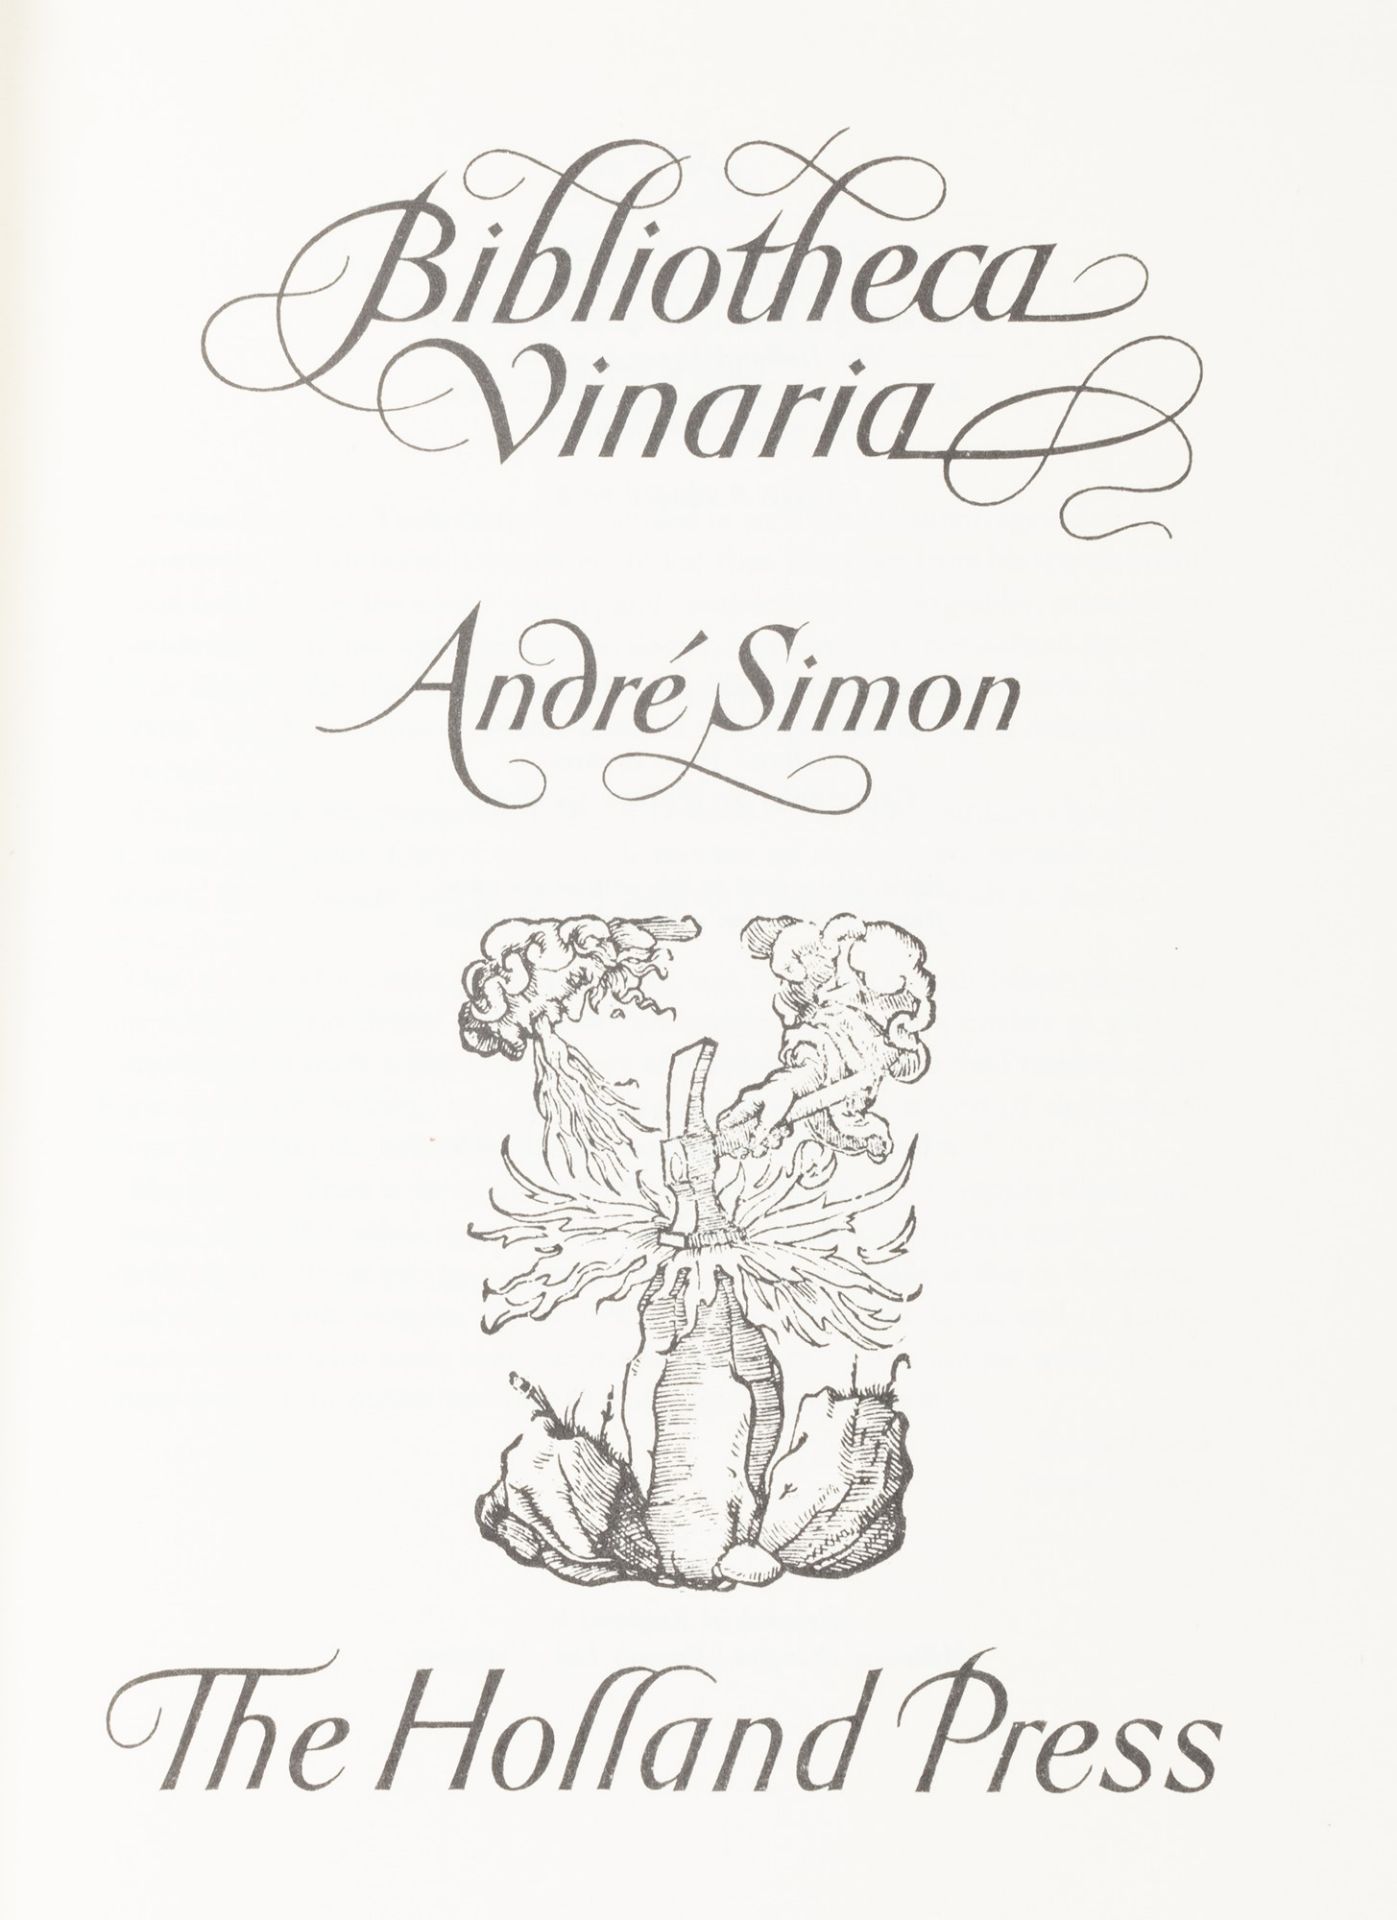 Enologia - Bibliografia - Simon, André - Bibliotheca vinaria